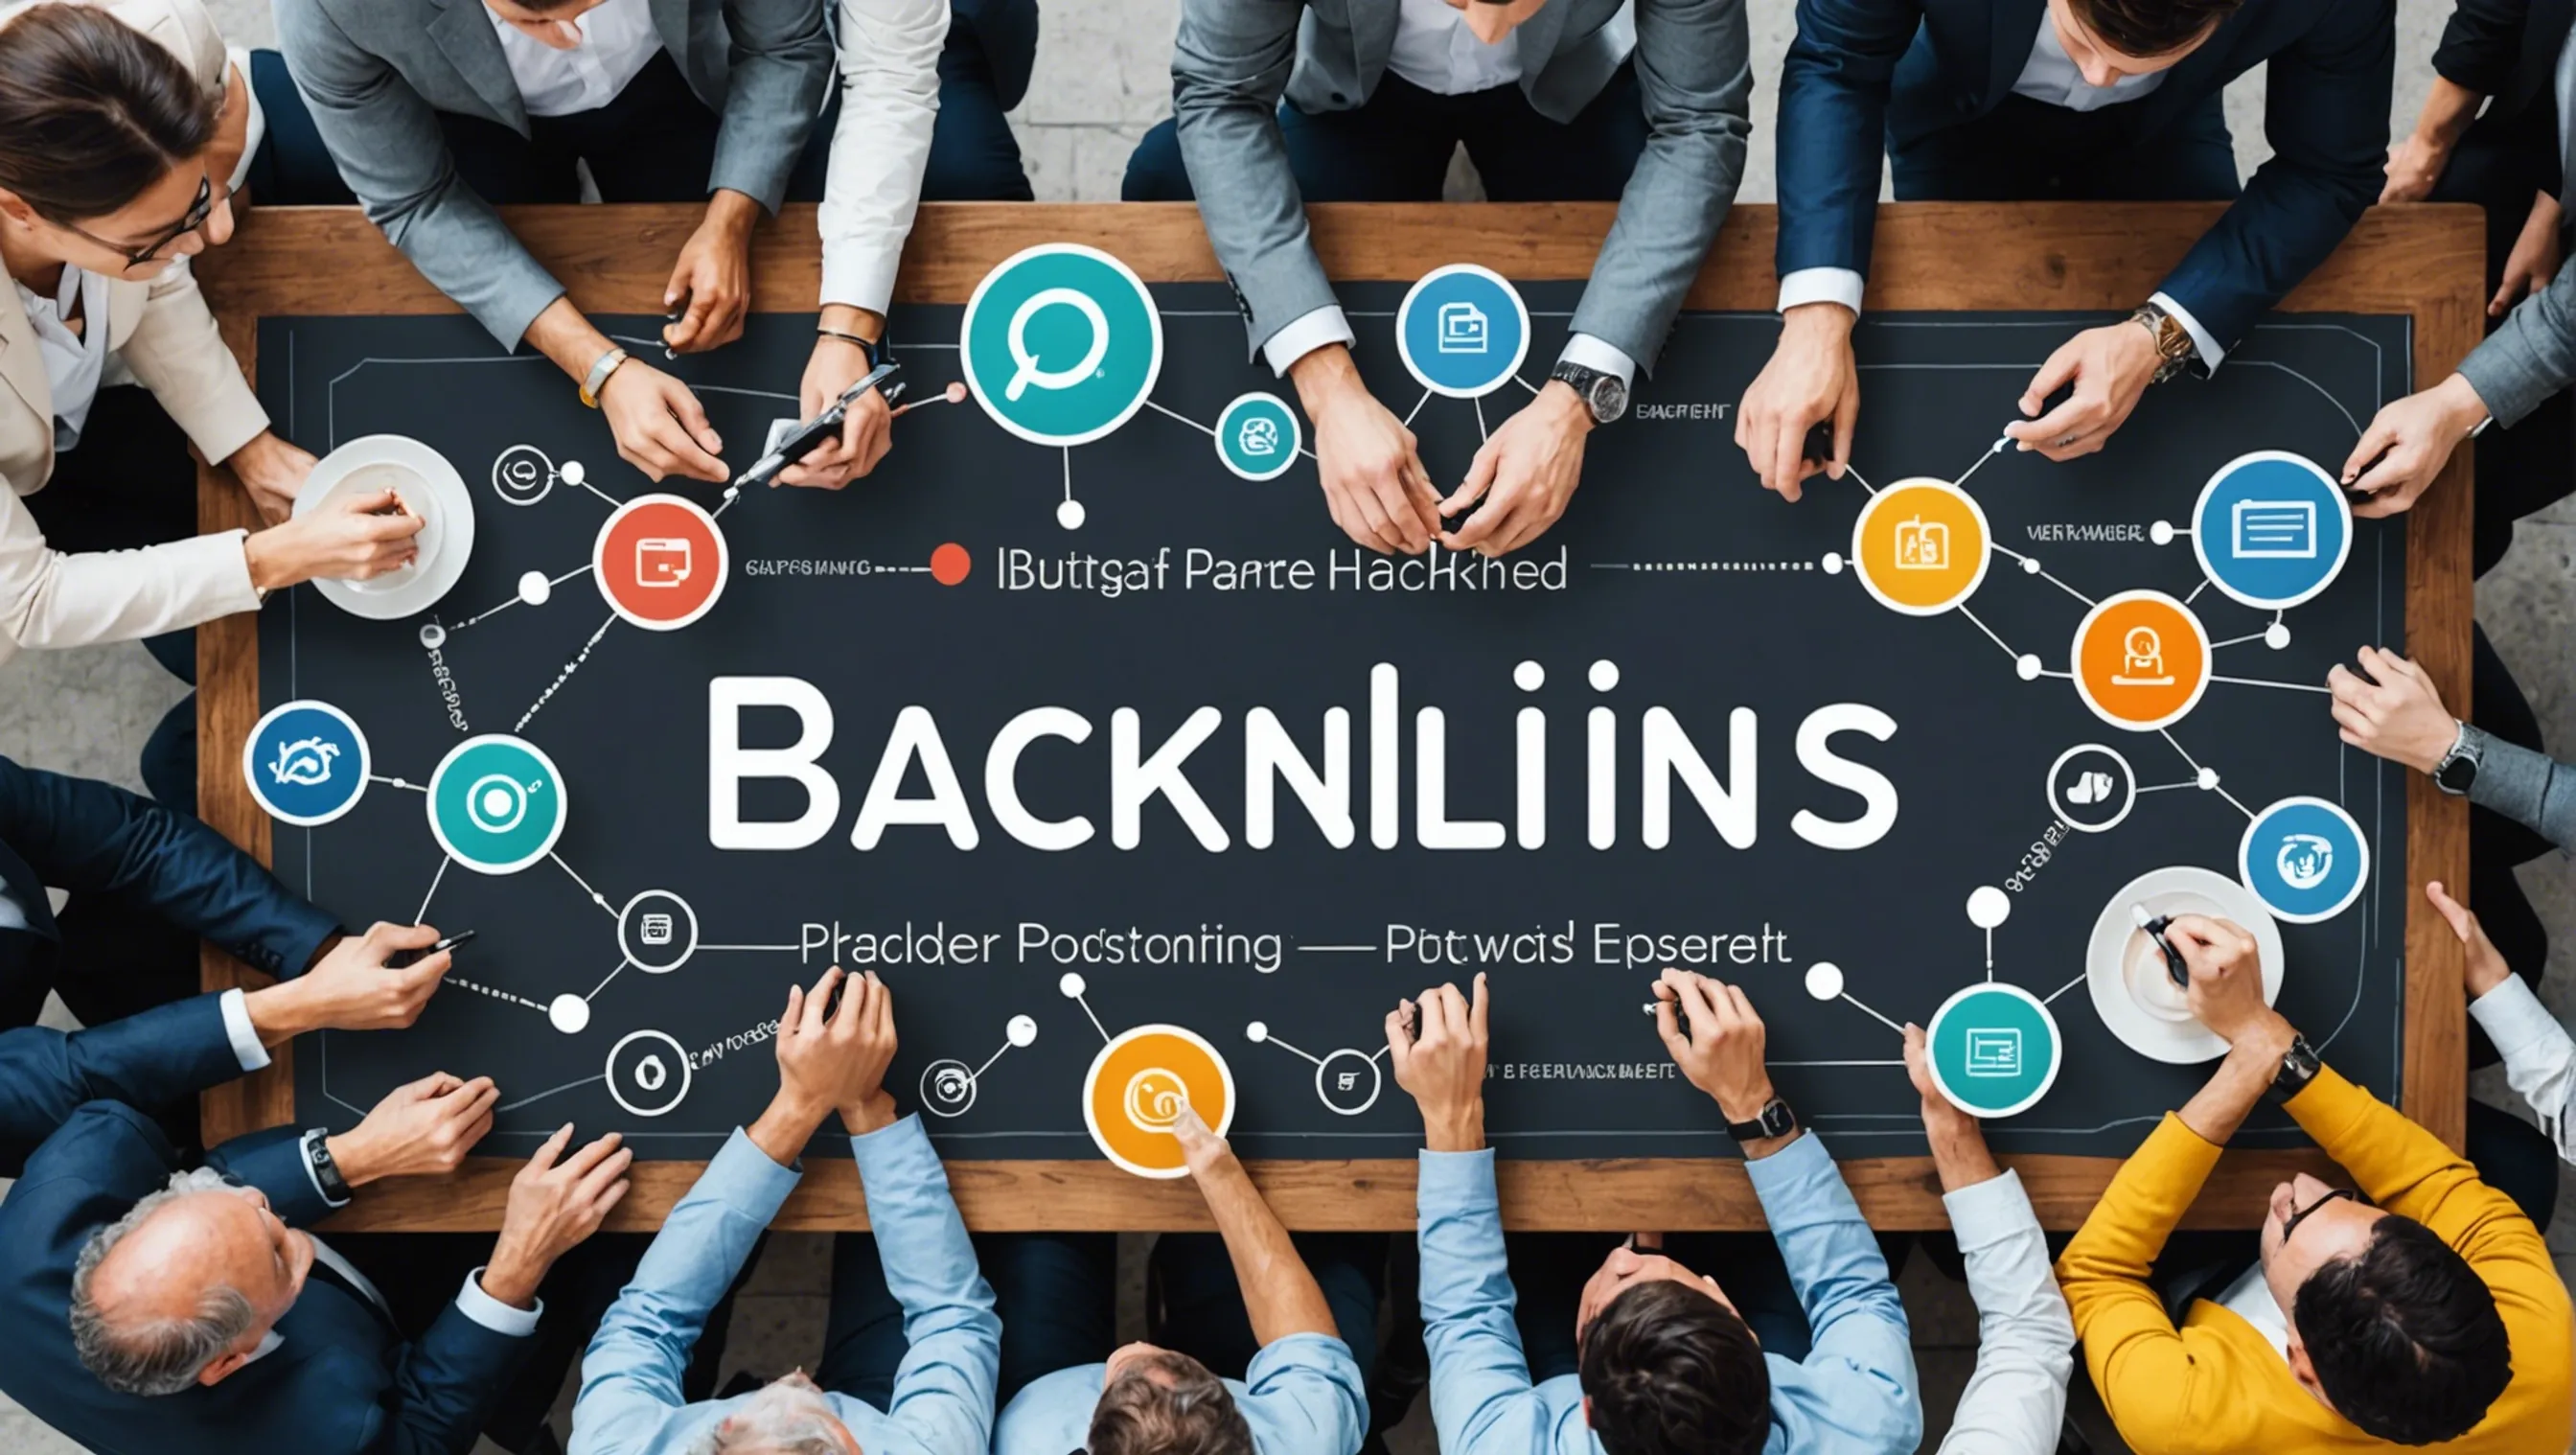 Building backlinks through partnerships